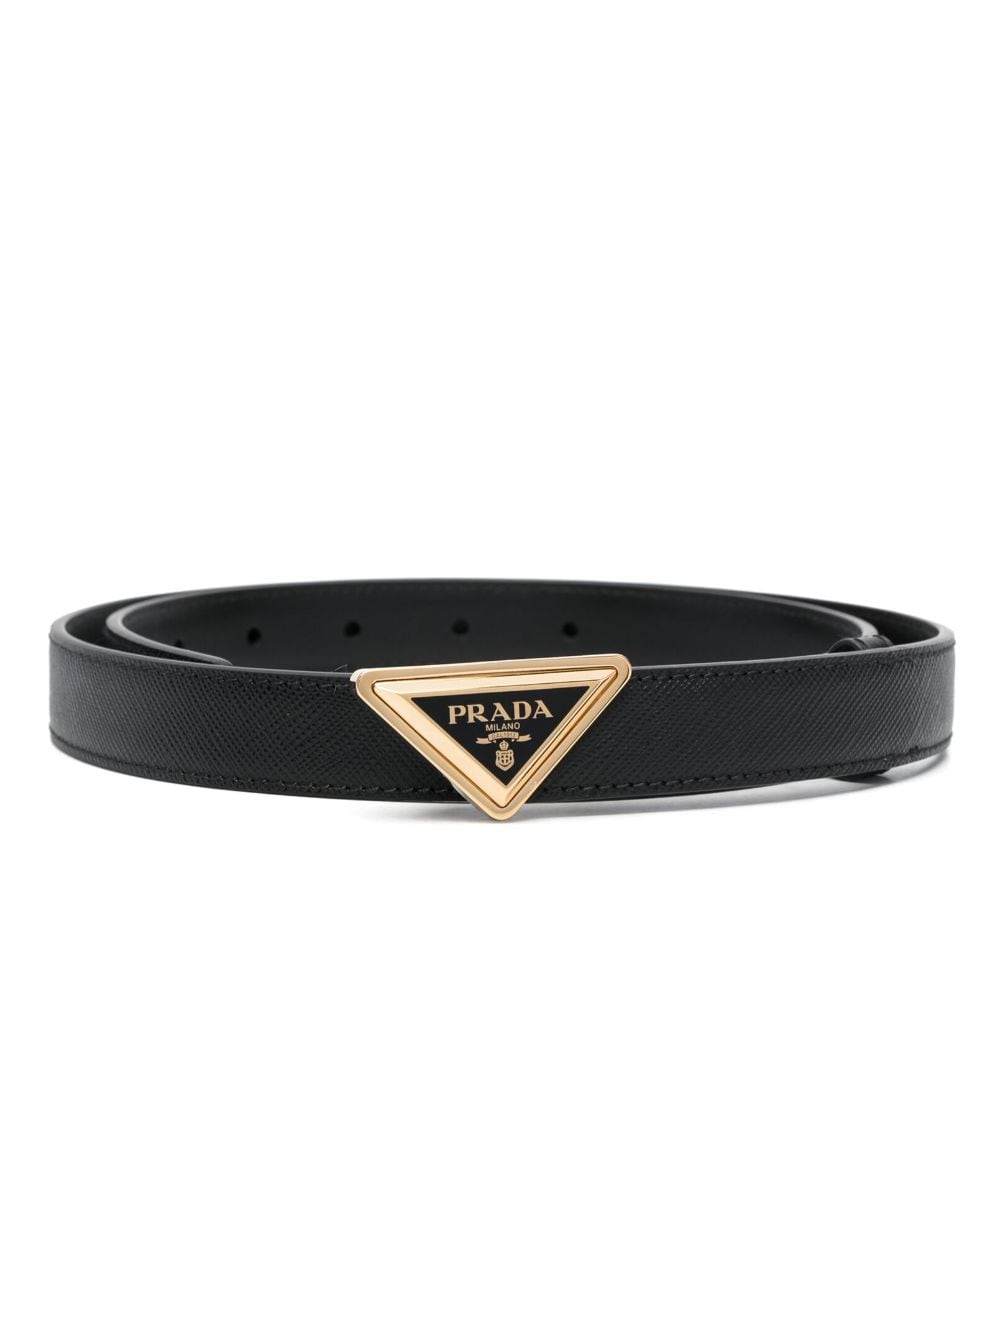 Saffiano leather belt